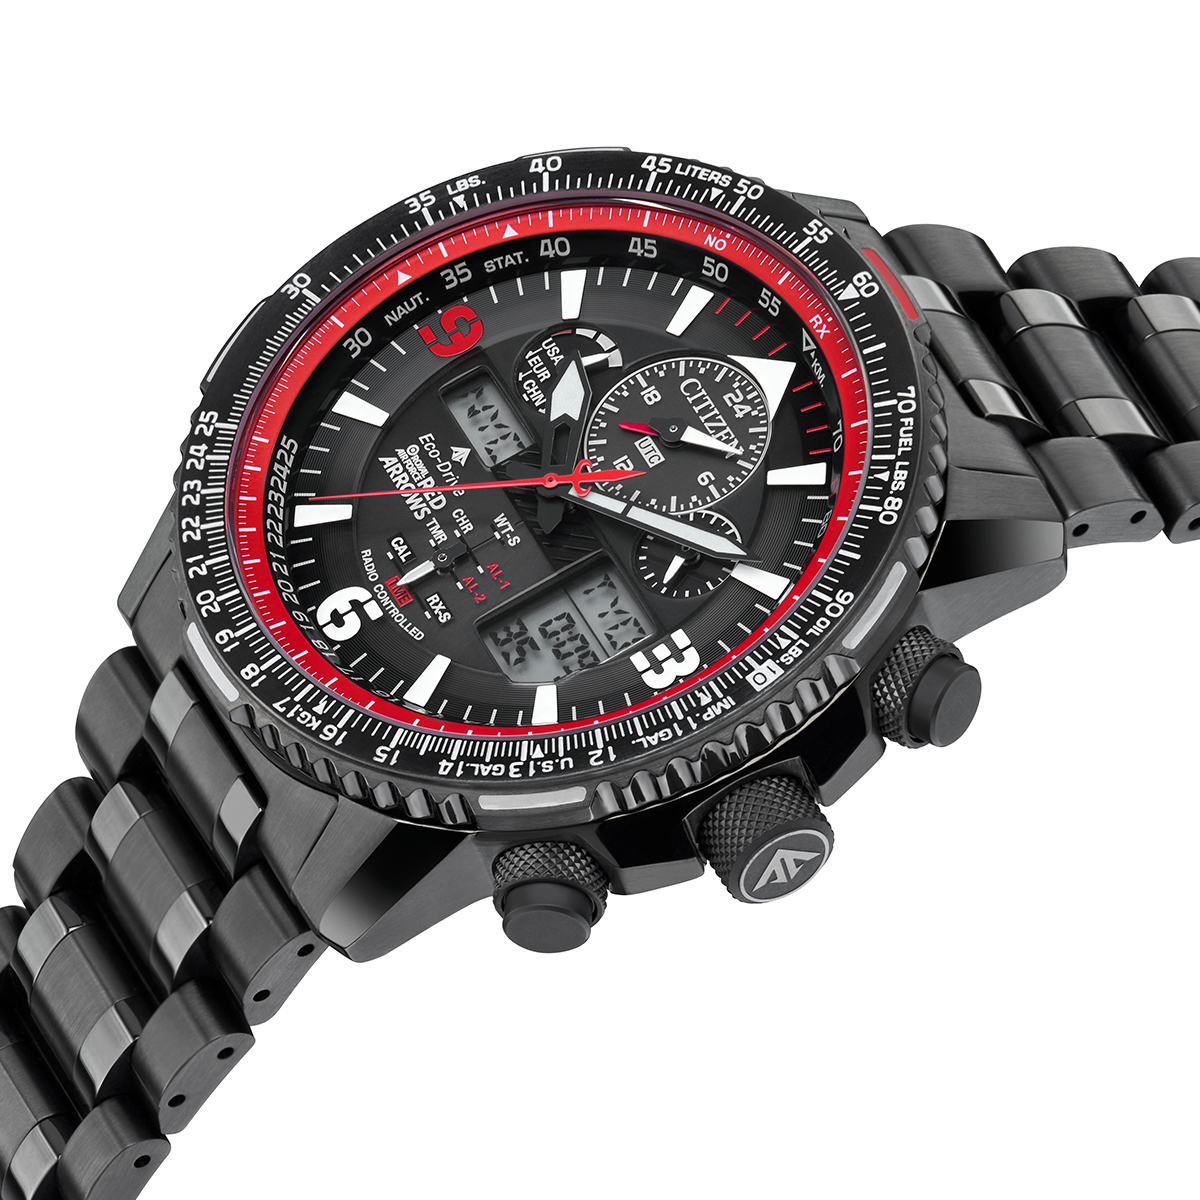 Citizen Limited Edition Red Arrows Skyhawk A-T Watch (JY8087-51E)